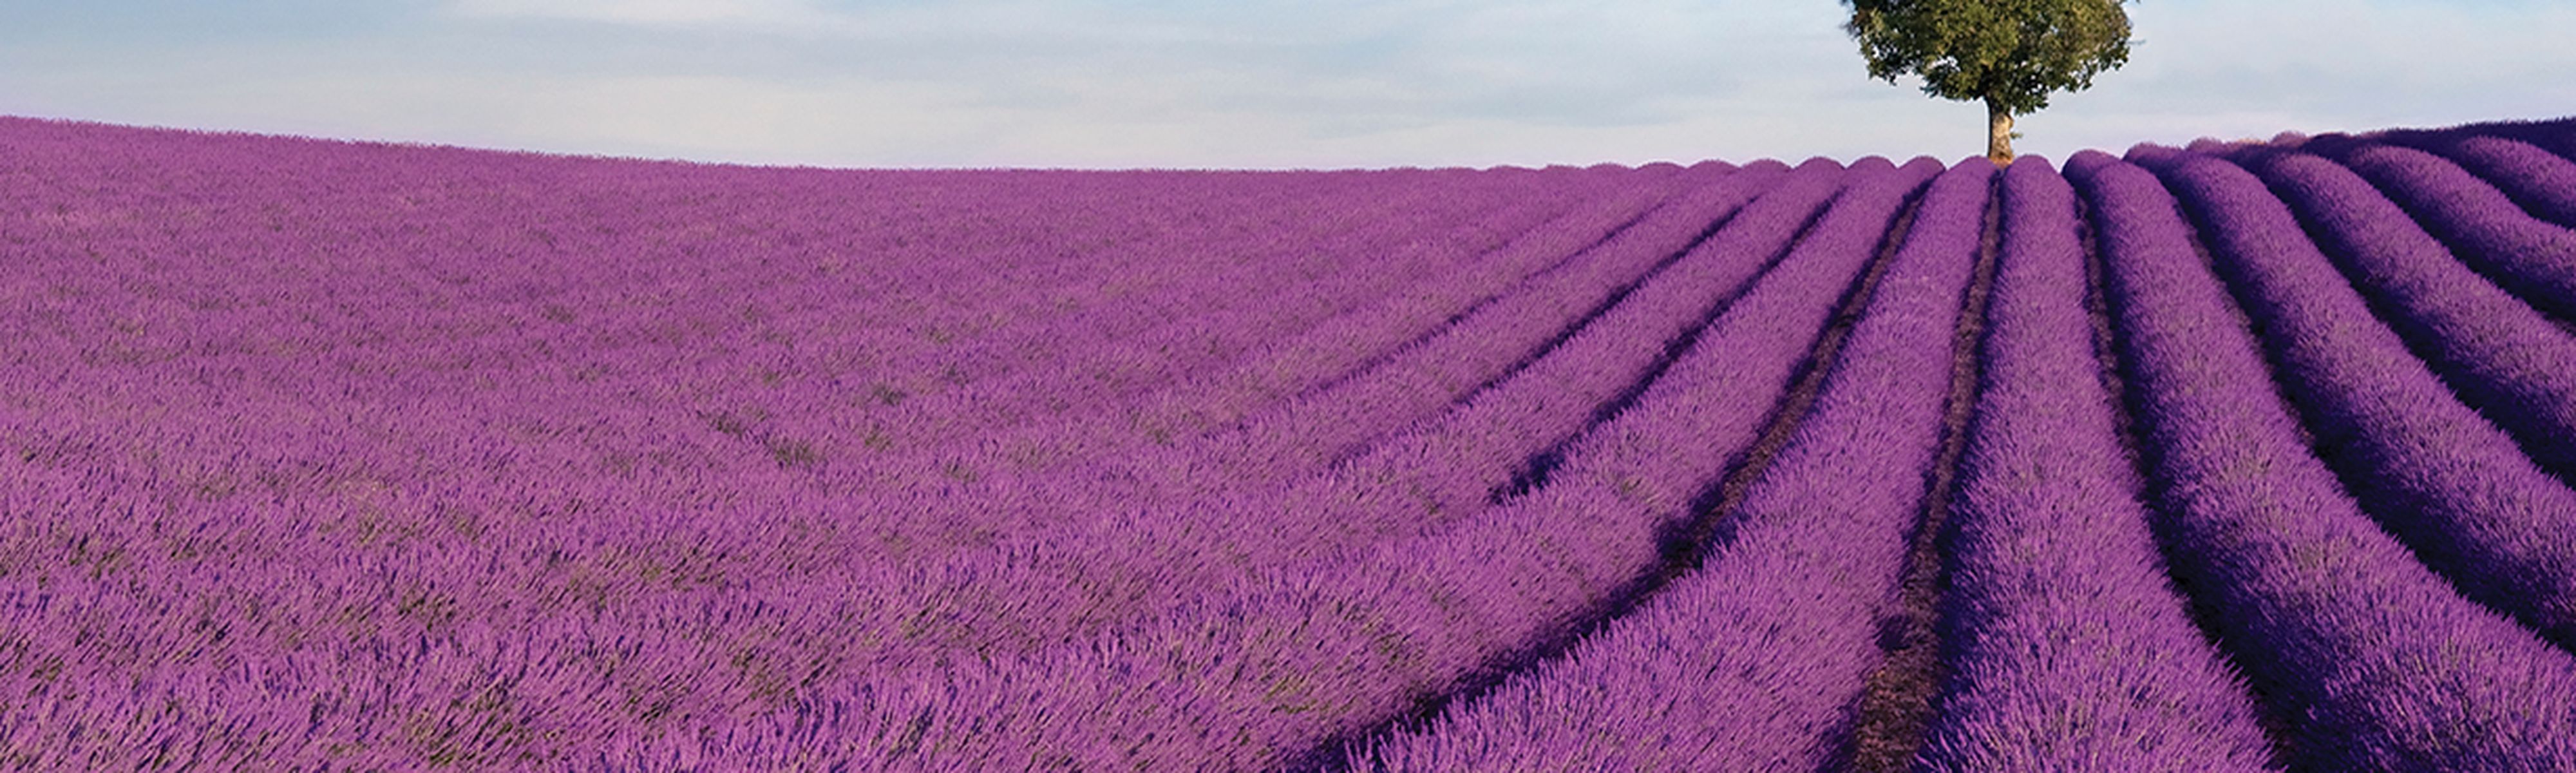 Lavender Field in France